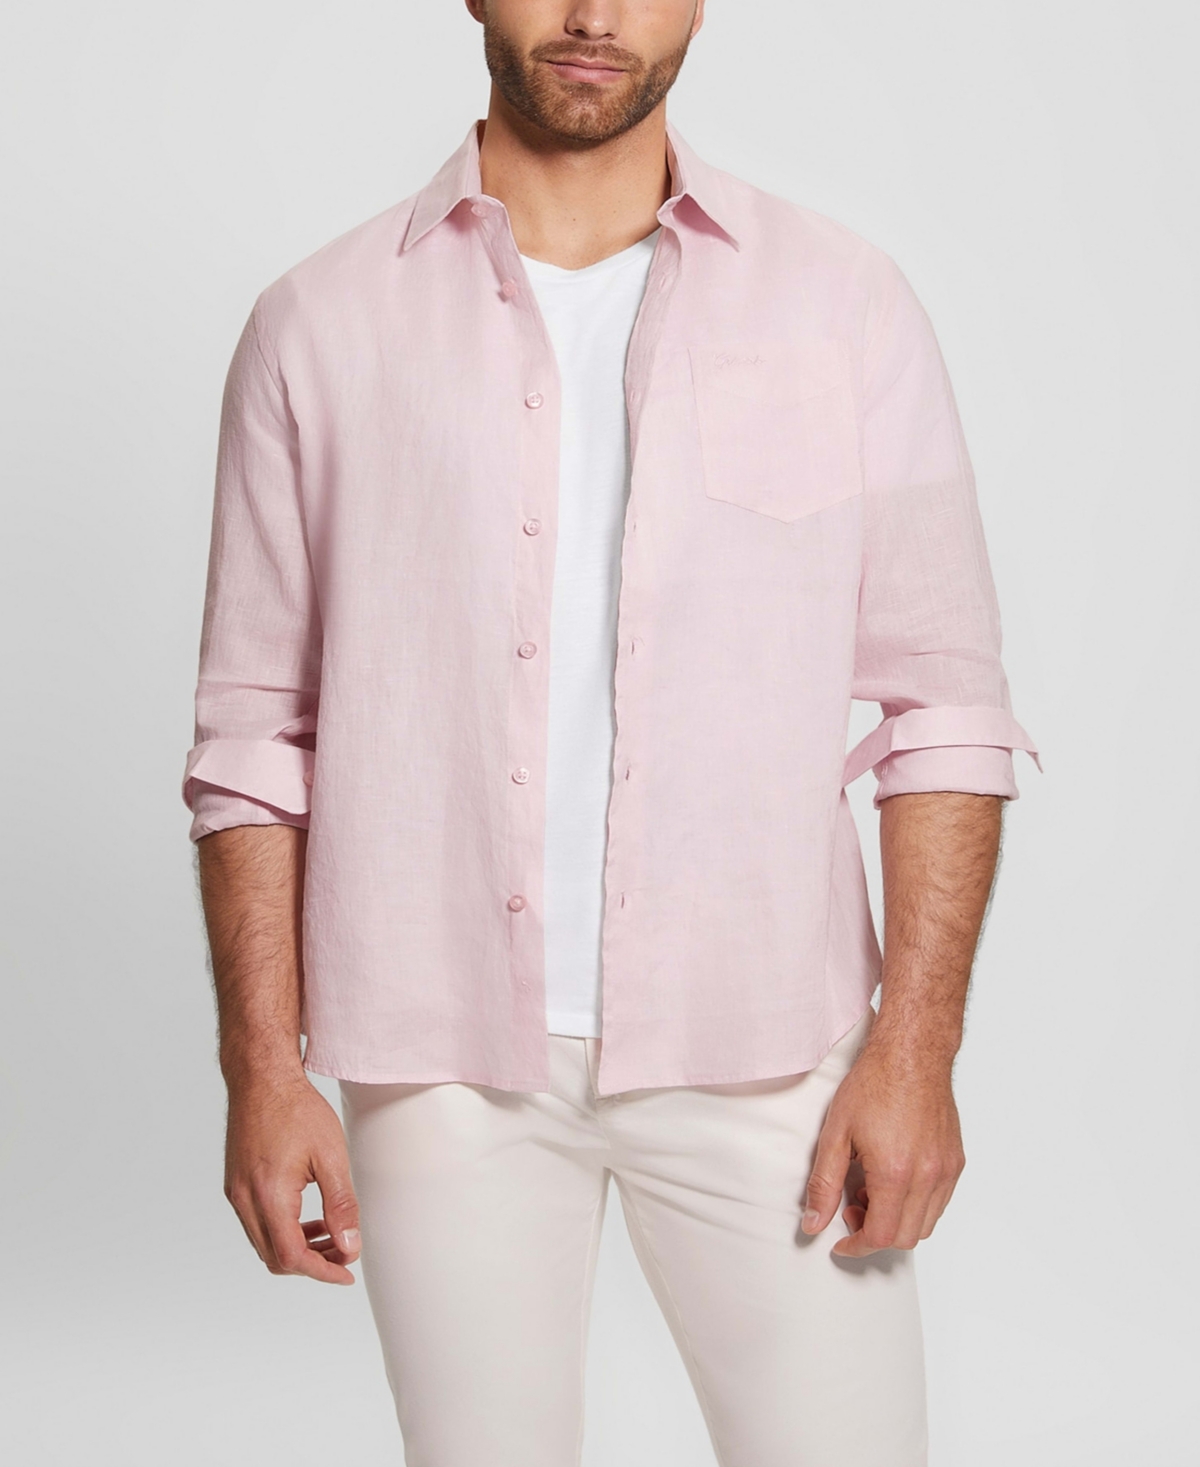 Guess Men's Island Linen Shirt In Airy Pink